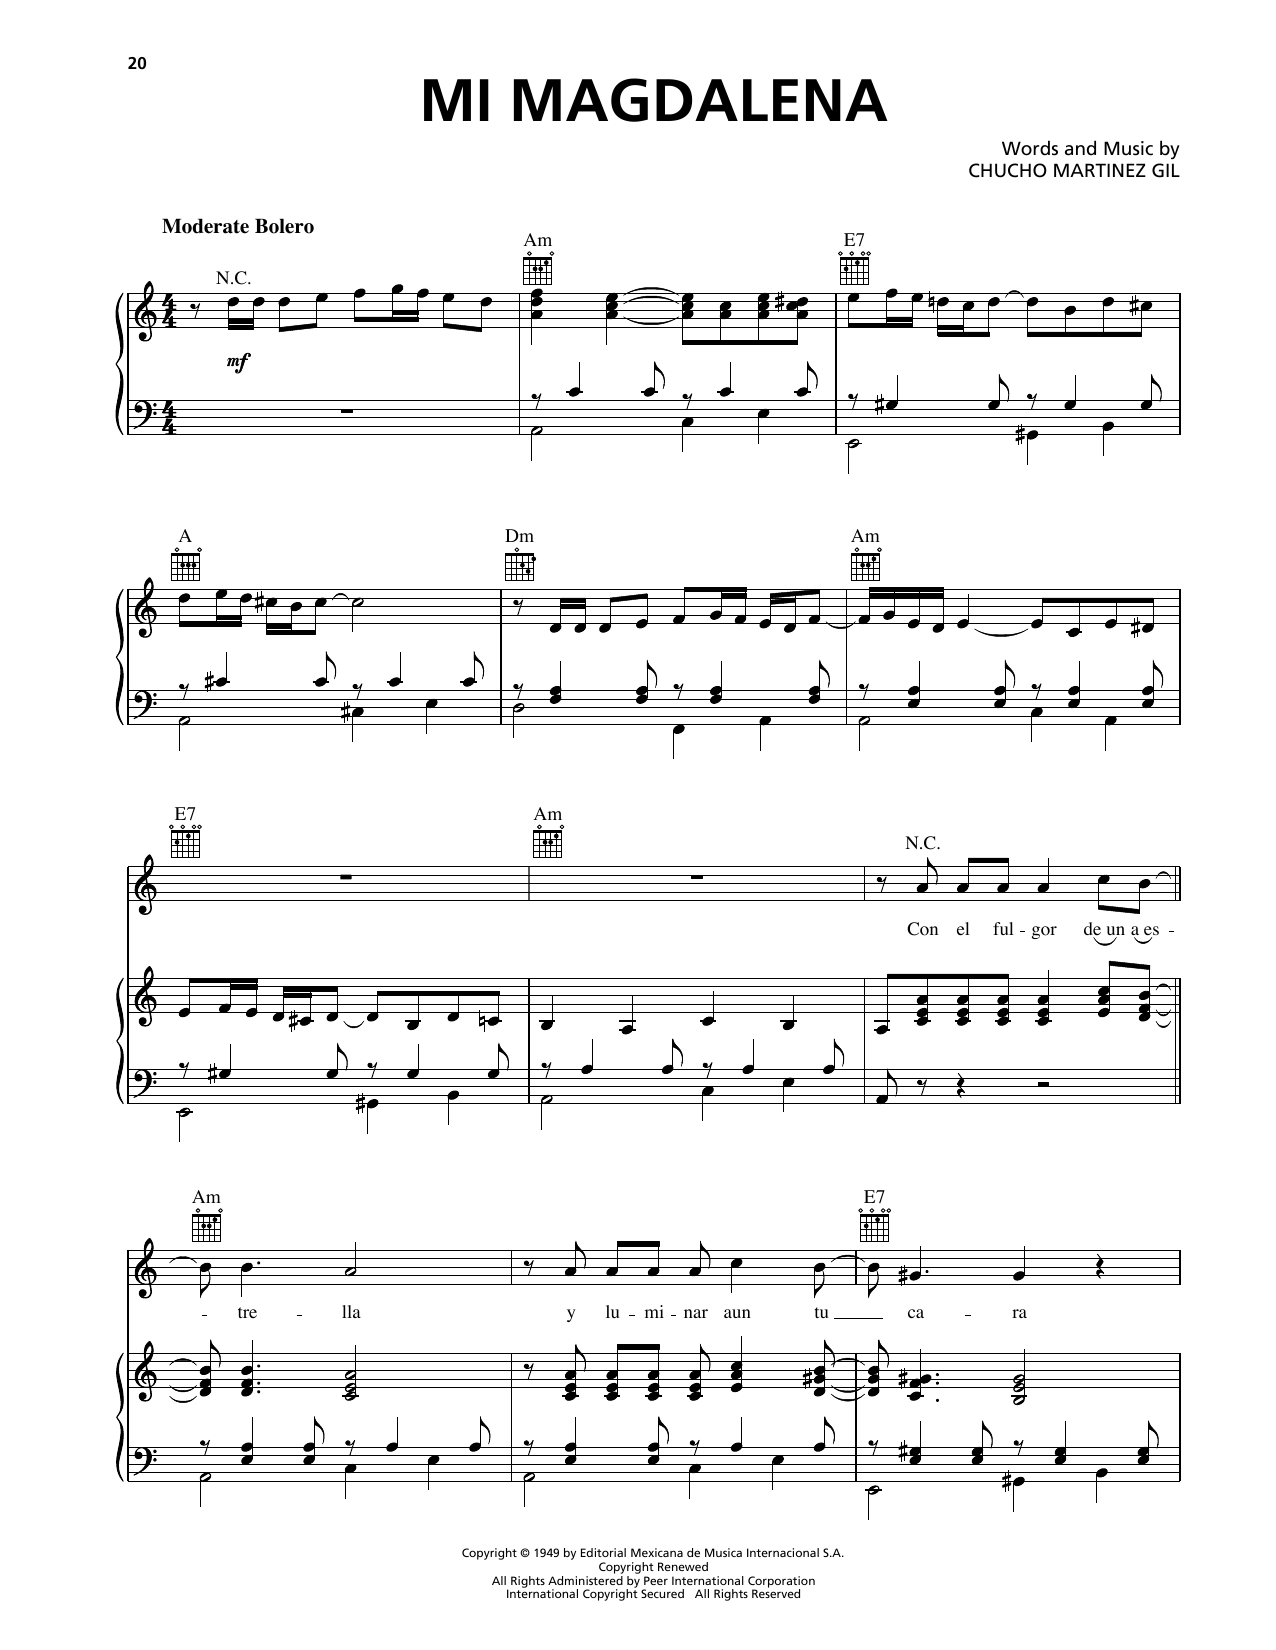 Trio Los Panchos Mi Magdalena Sheet Music Notes & Chords for Piano, Vocal & Guitar Chords (Right-Hand Melody) - Download or Print PDF